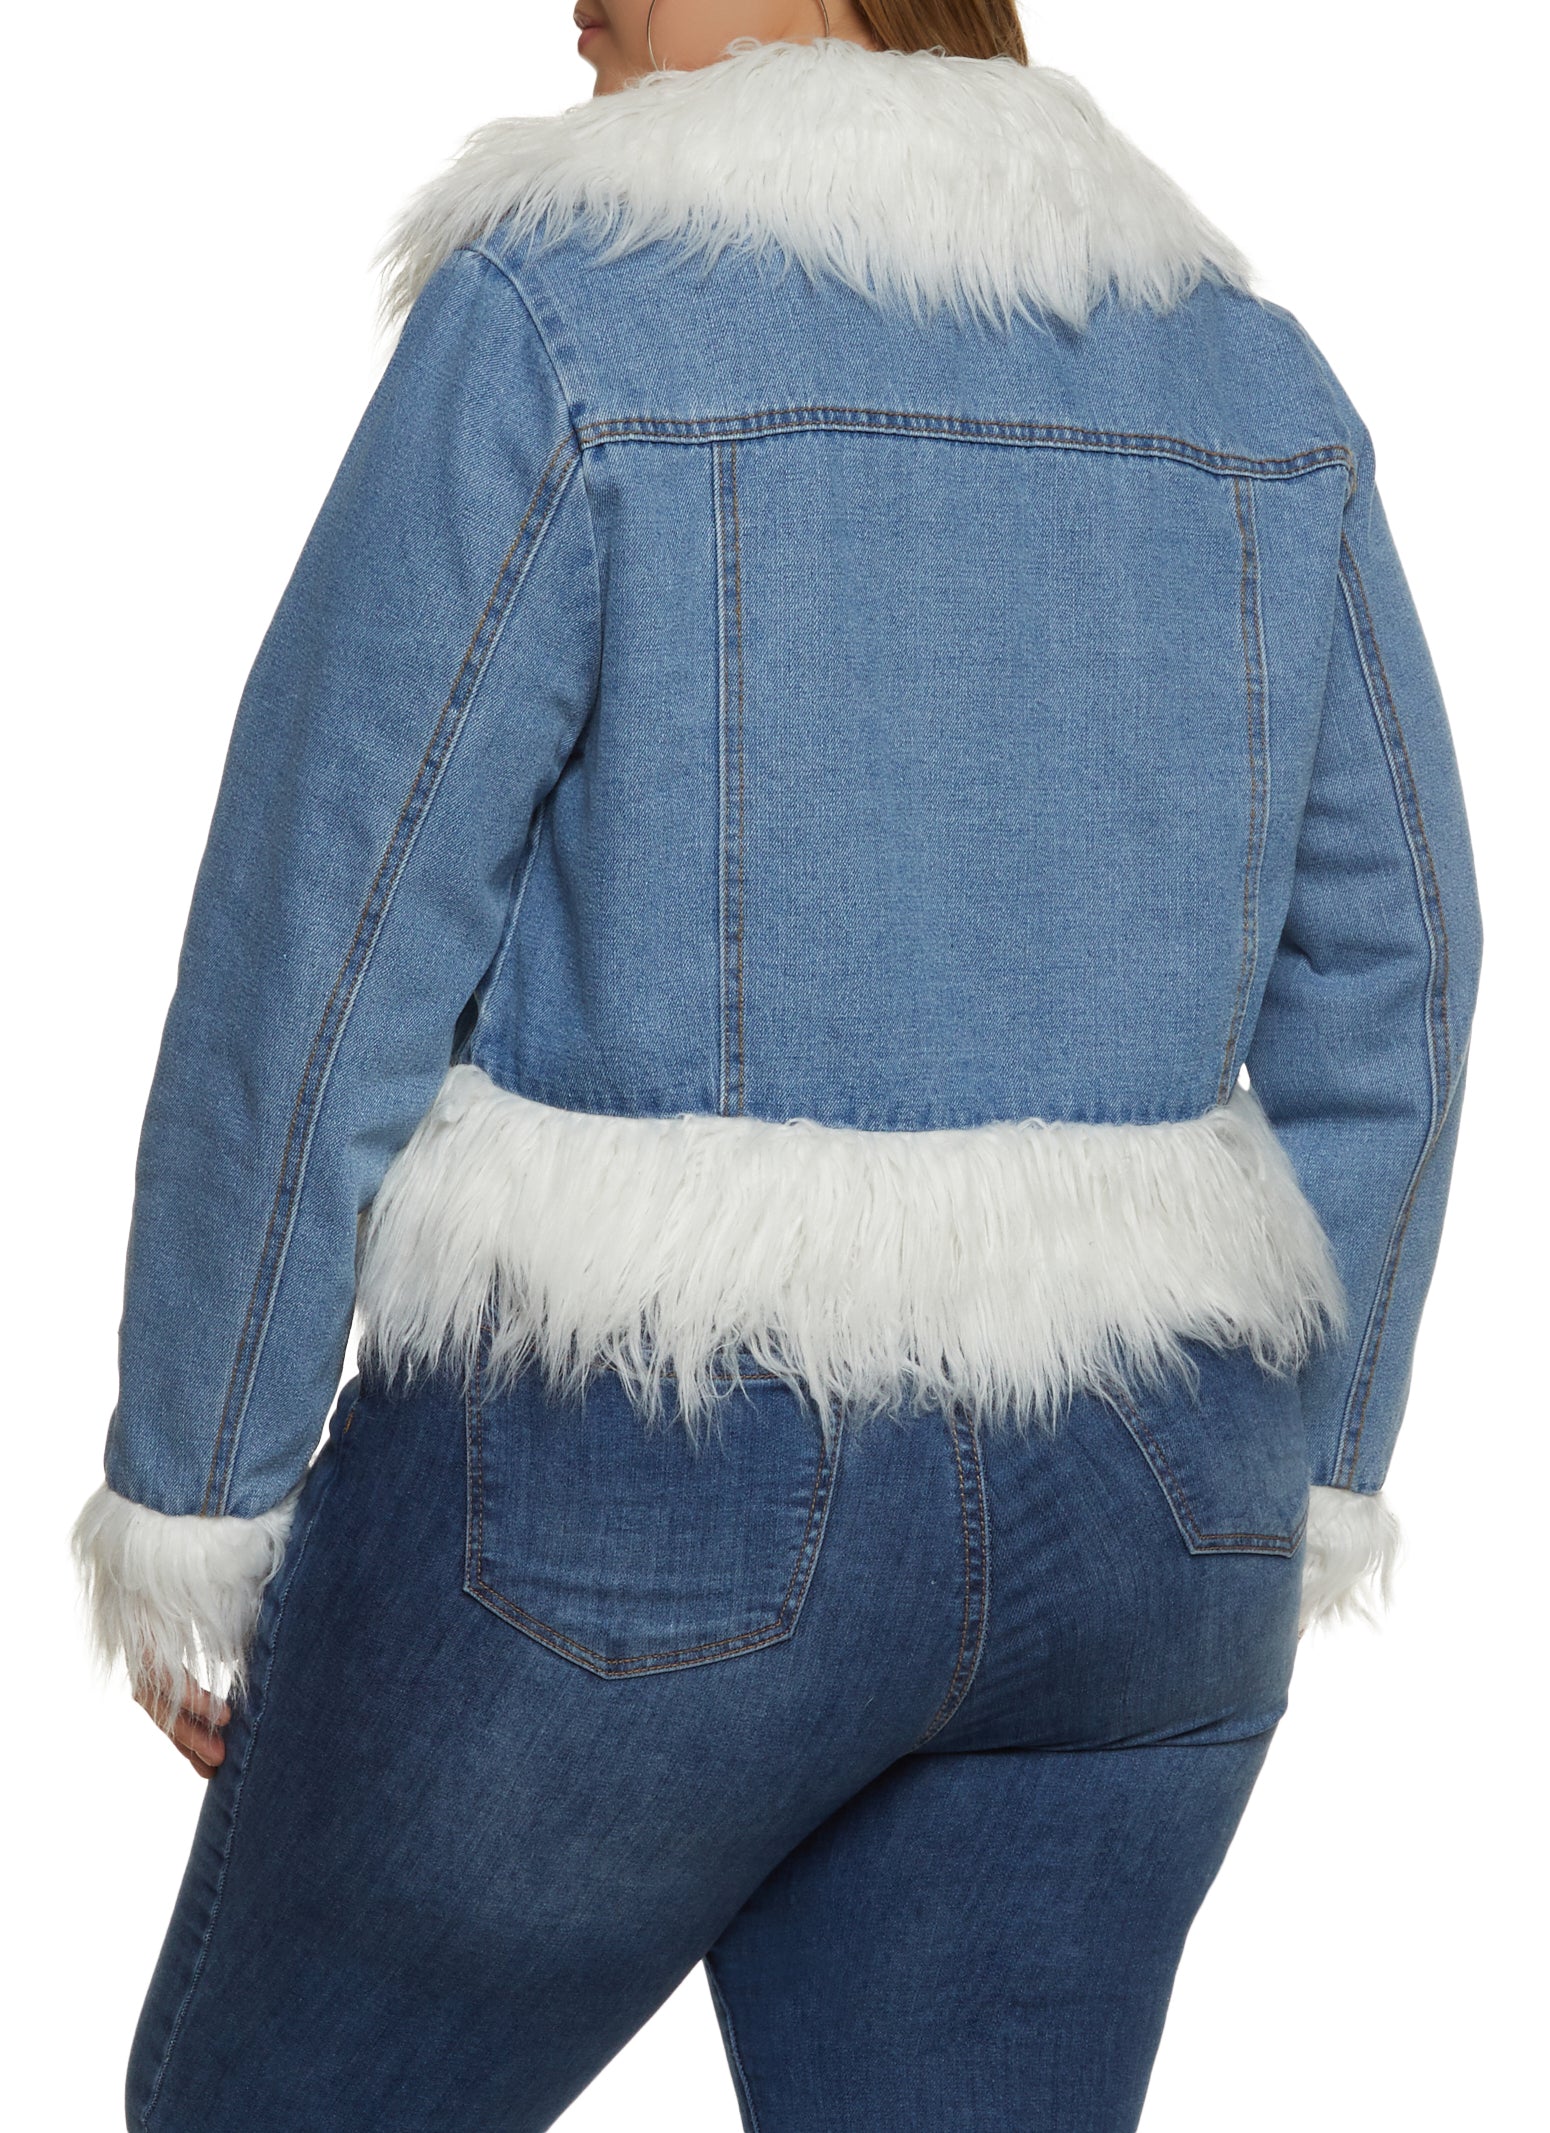 Winter Wool Hoodie Womens Denim Jacket With Faux Fur Collar Padded Warm  Bomber Windbreake Coat T200111 From Xue04, $36.4 | DHgate.Com